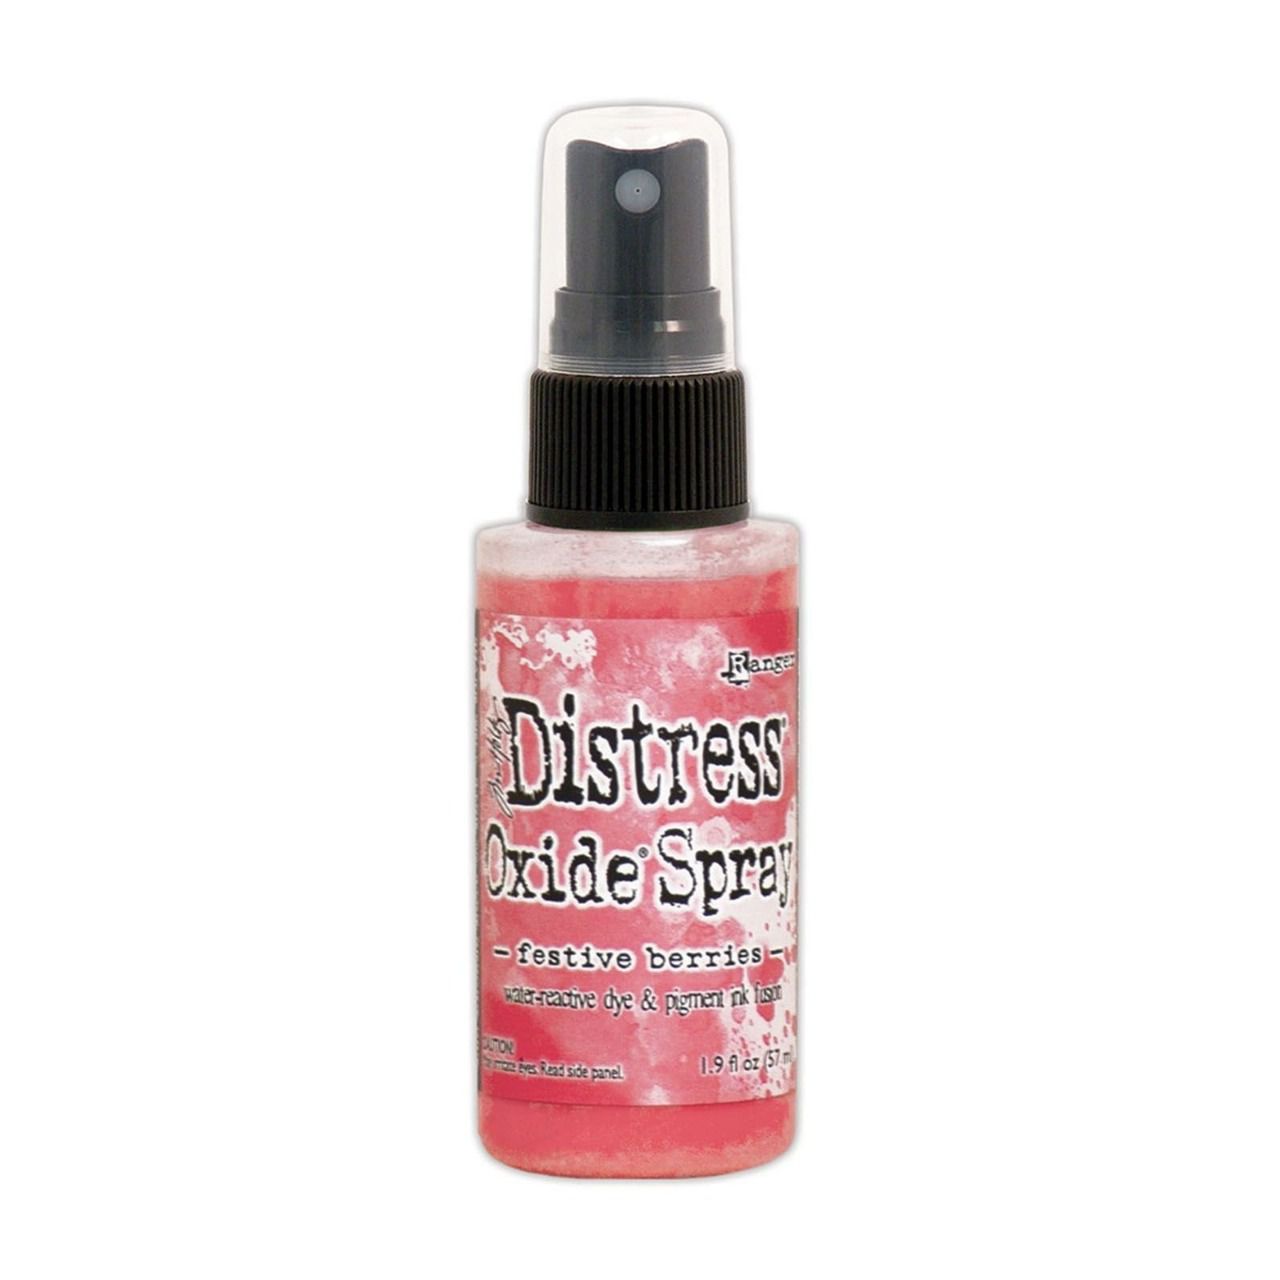 Distress spray oxide : Festives berries